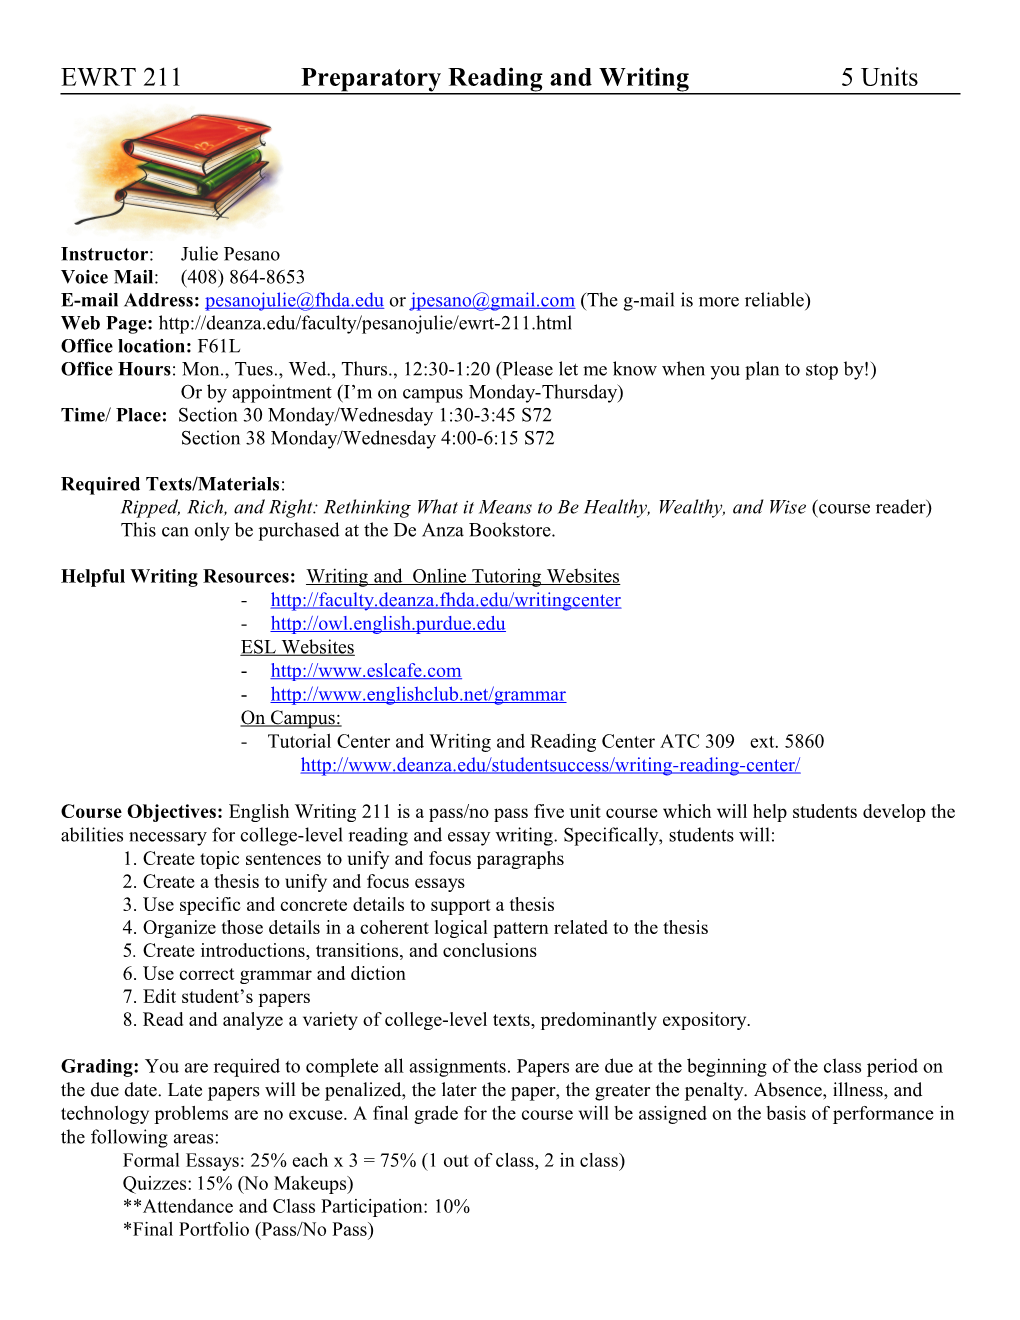 EWRT 211 Preparatory Reading and Writing 5 Units